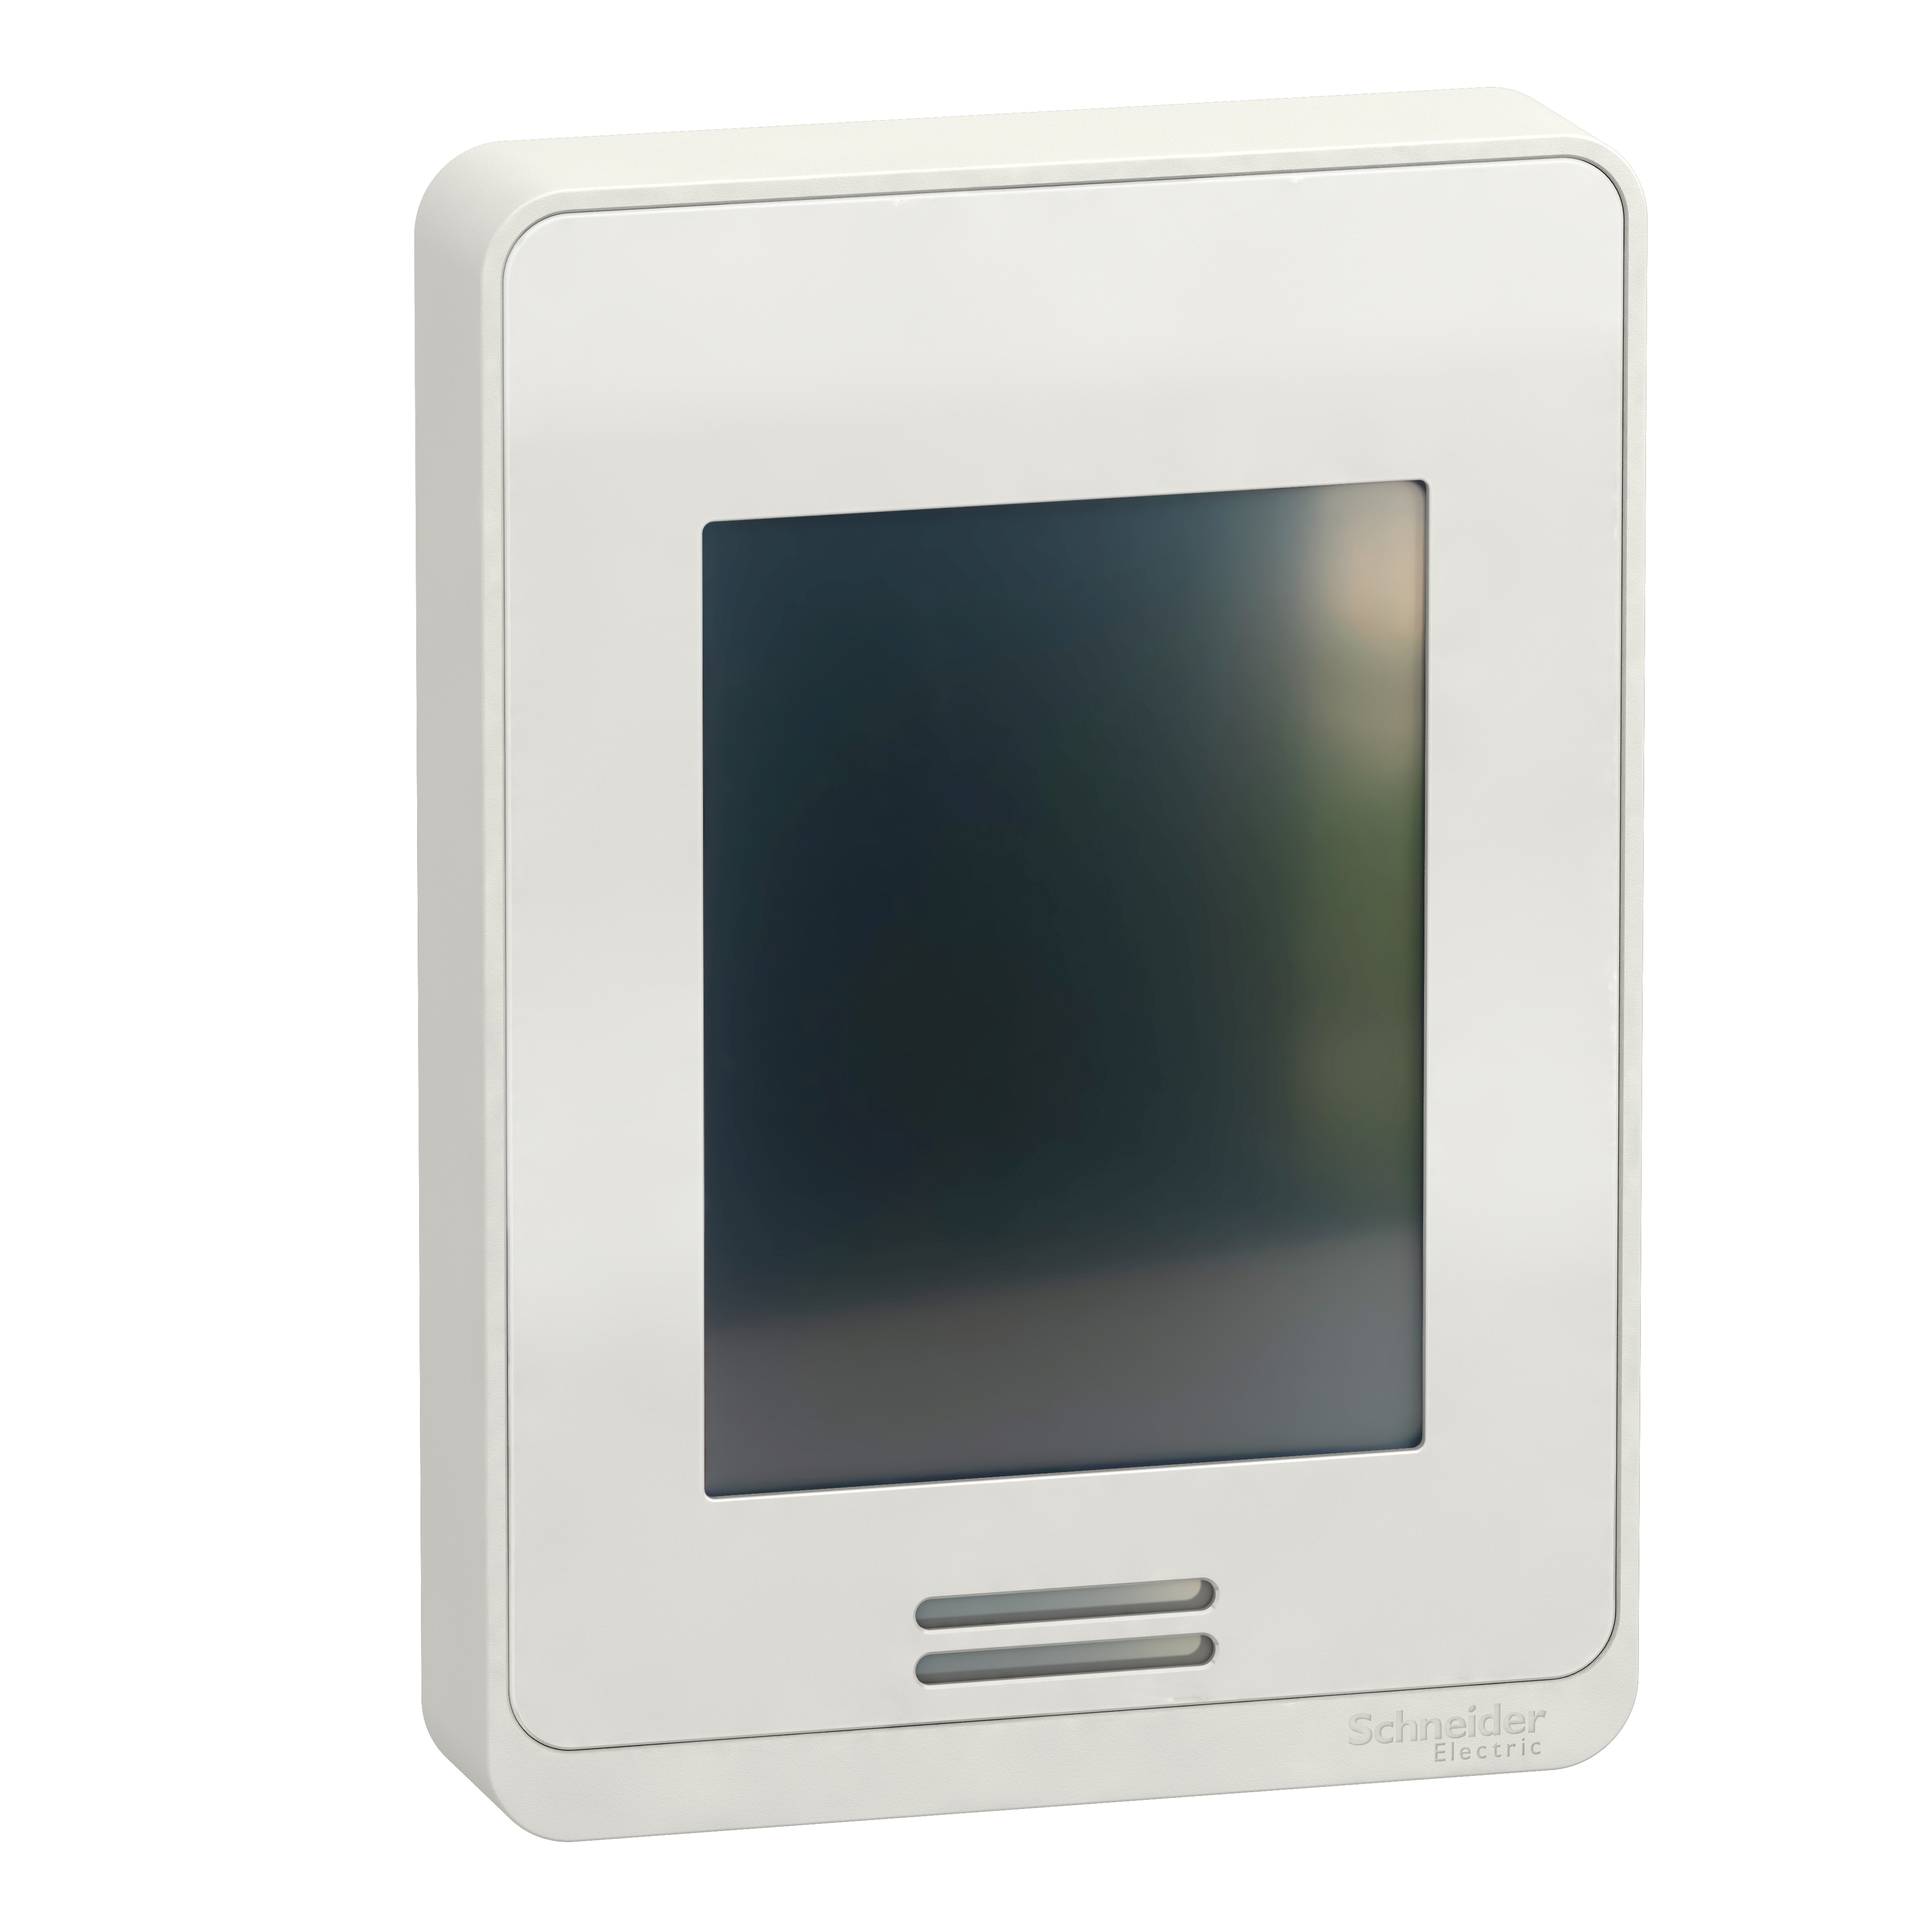 Modicon M172 Display Color TouchScreen, Temperature & Humidity built-in sensors